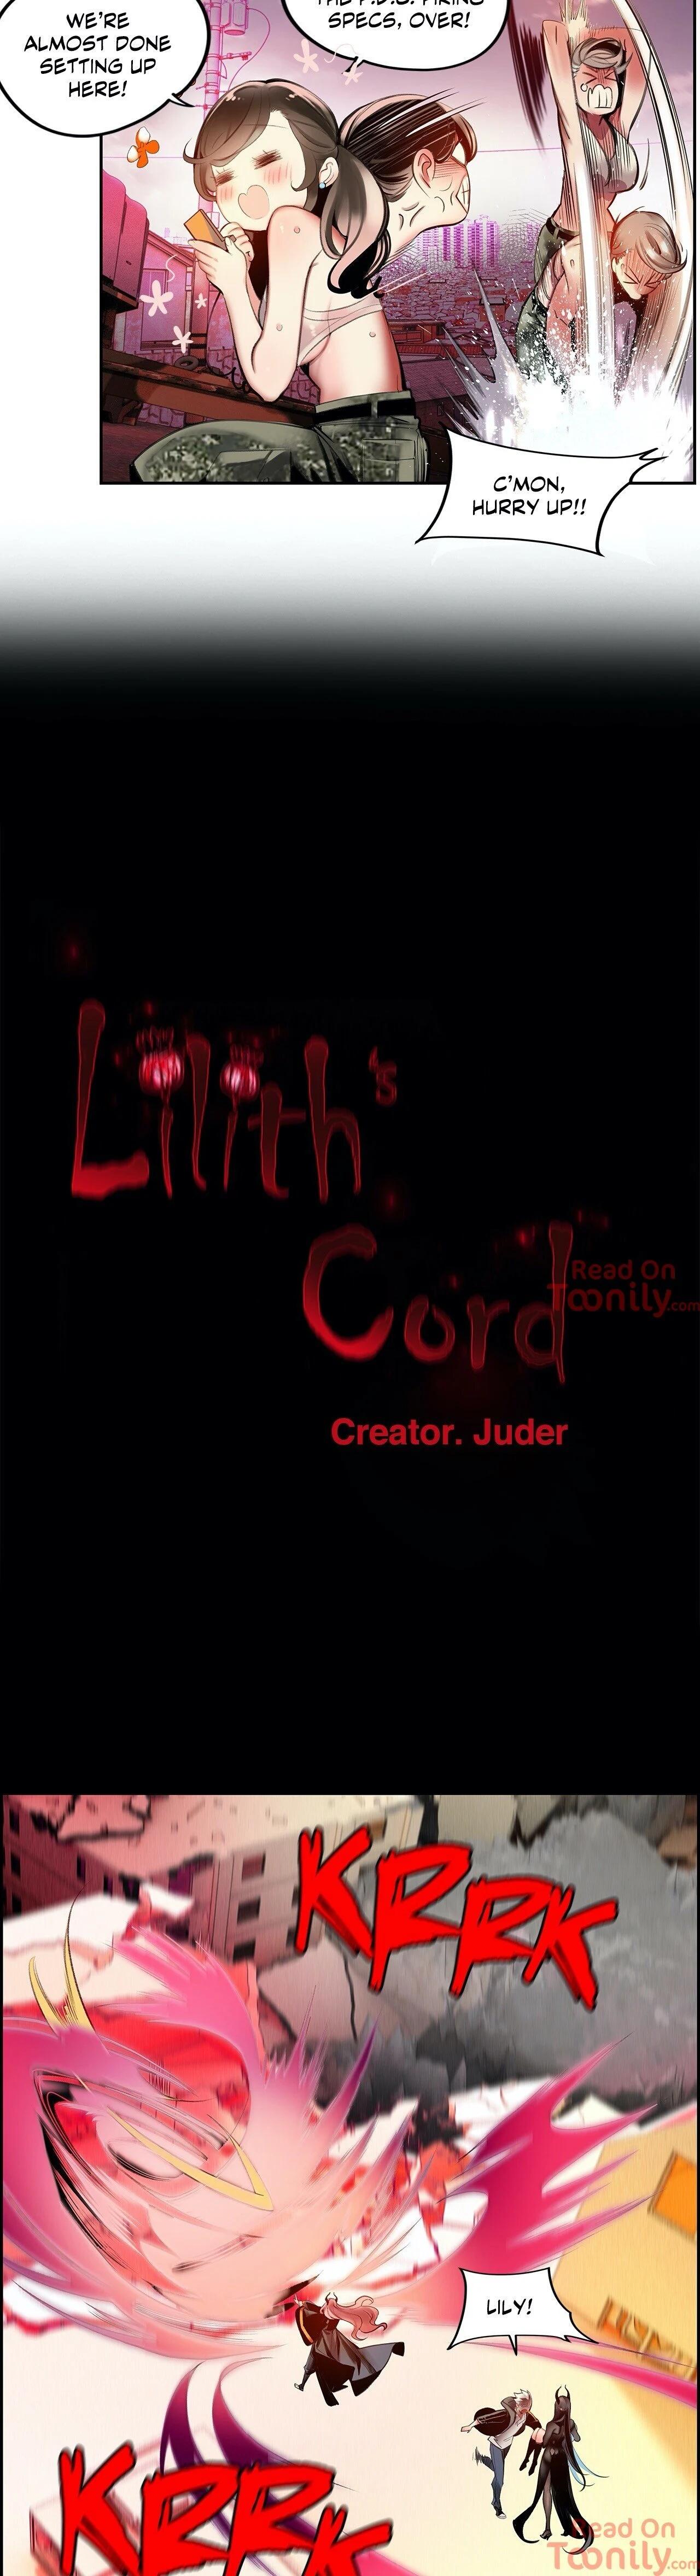 Lilith`s Cord [Juder, Deo Mi Mandu] Ch. 069-092.5 - Part 2- english 612